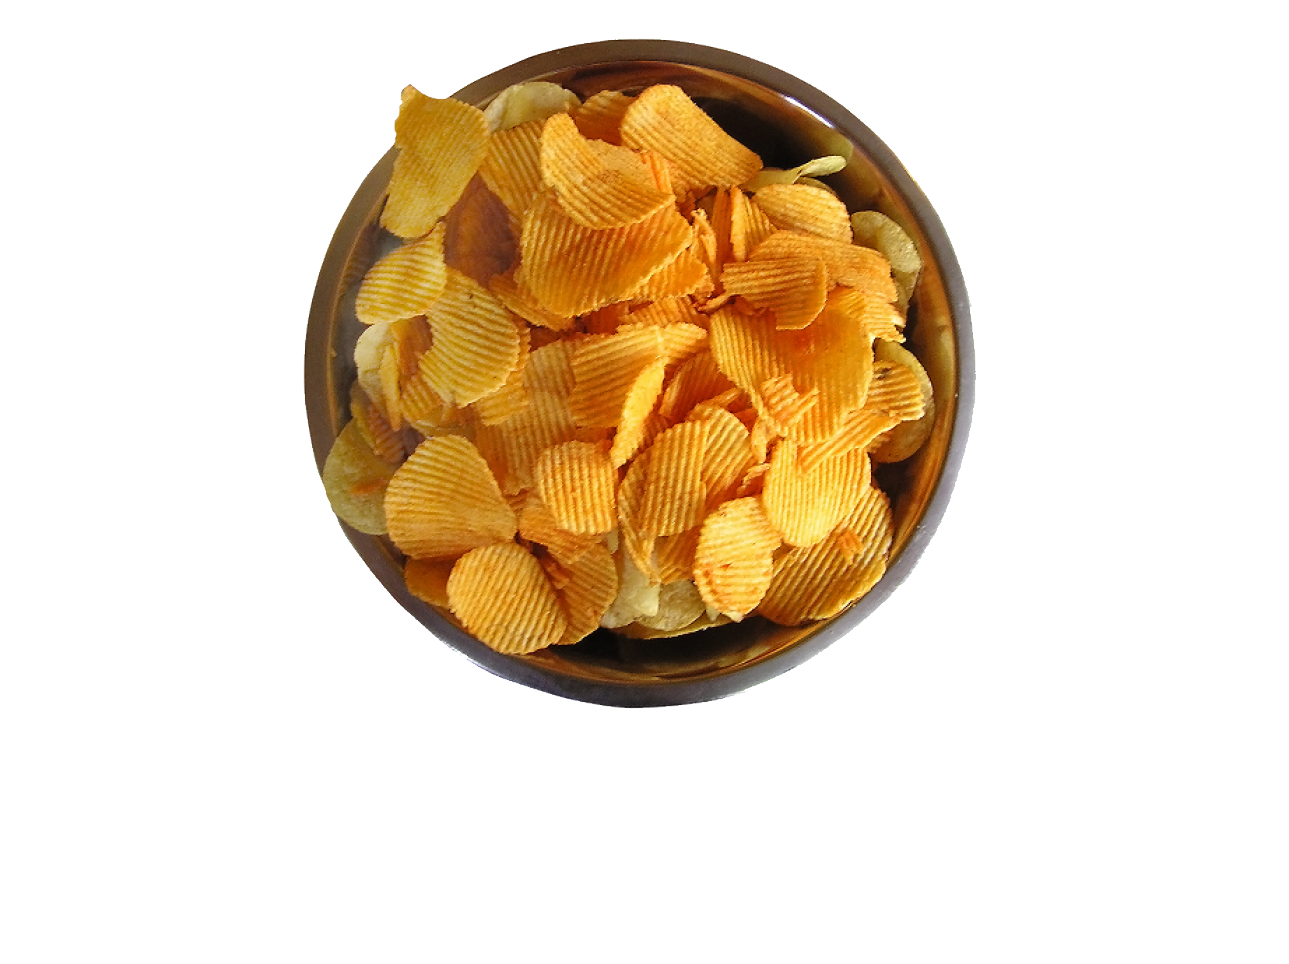 Potato chips PNG image free Download